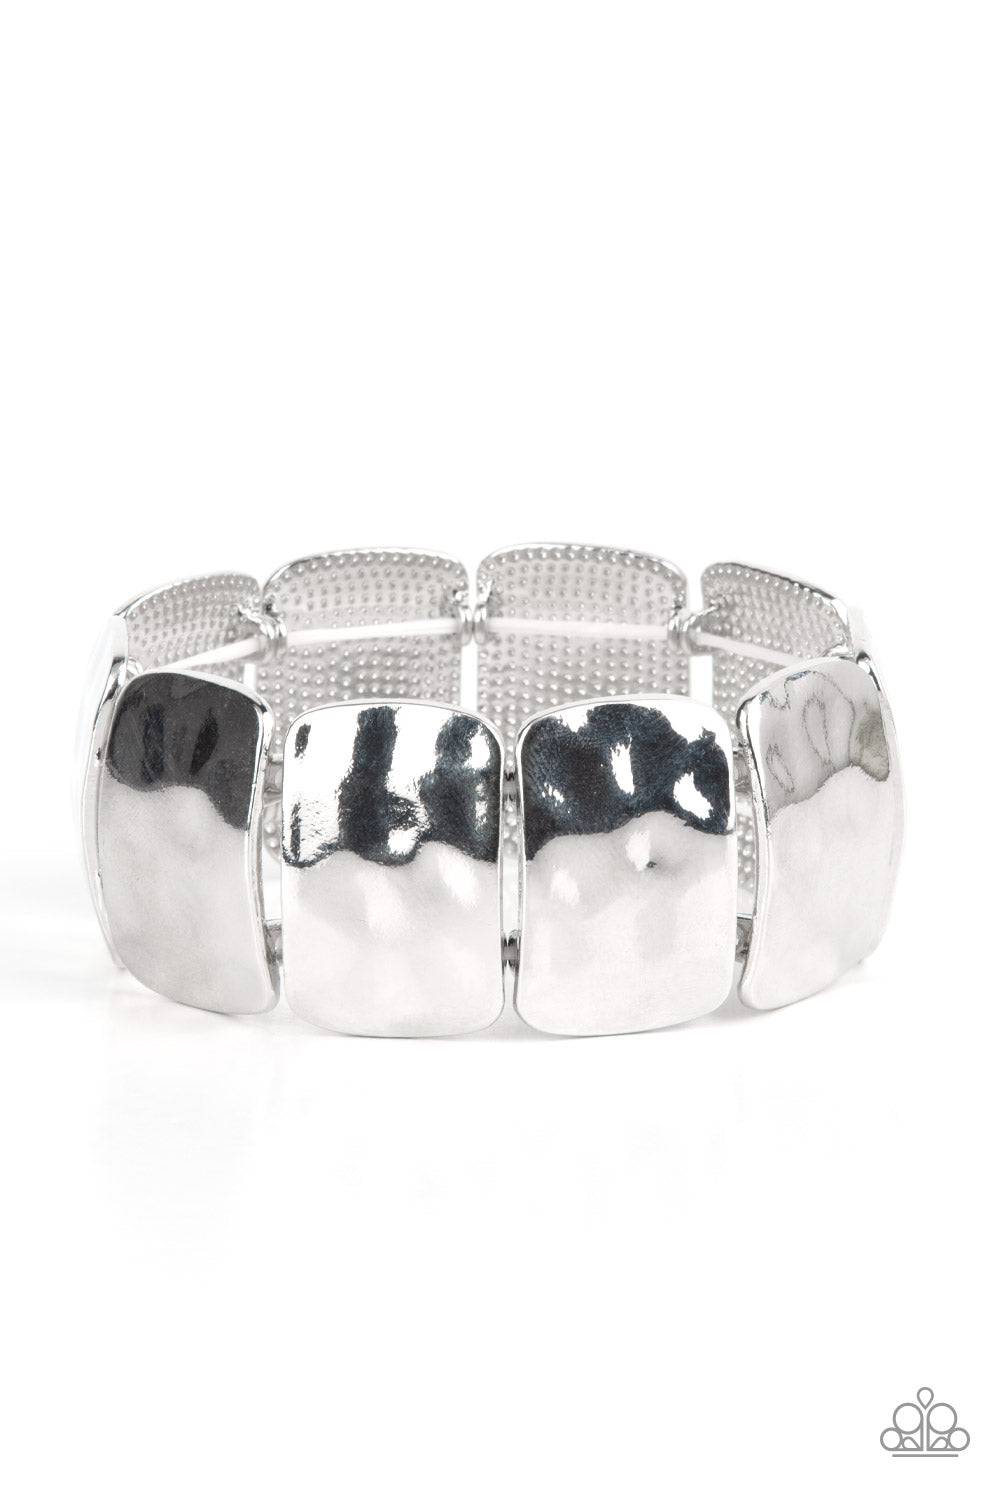 Molten Maverick - Silver Bracelet - Princess Glam Shop